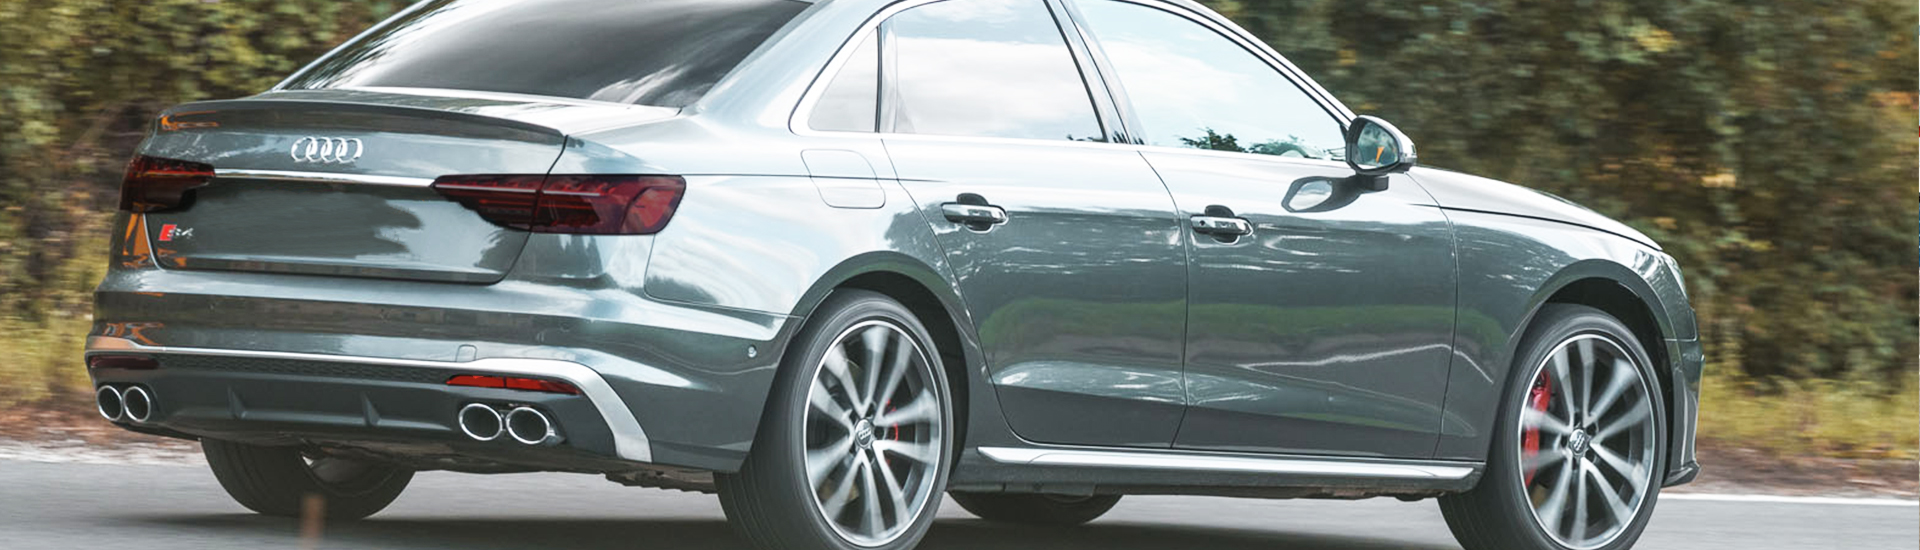 Audi S4 Tail Light Tint Covers